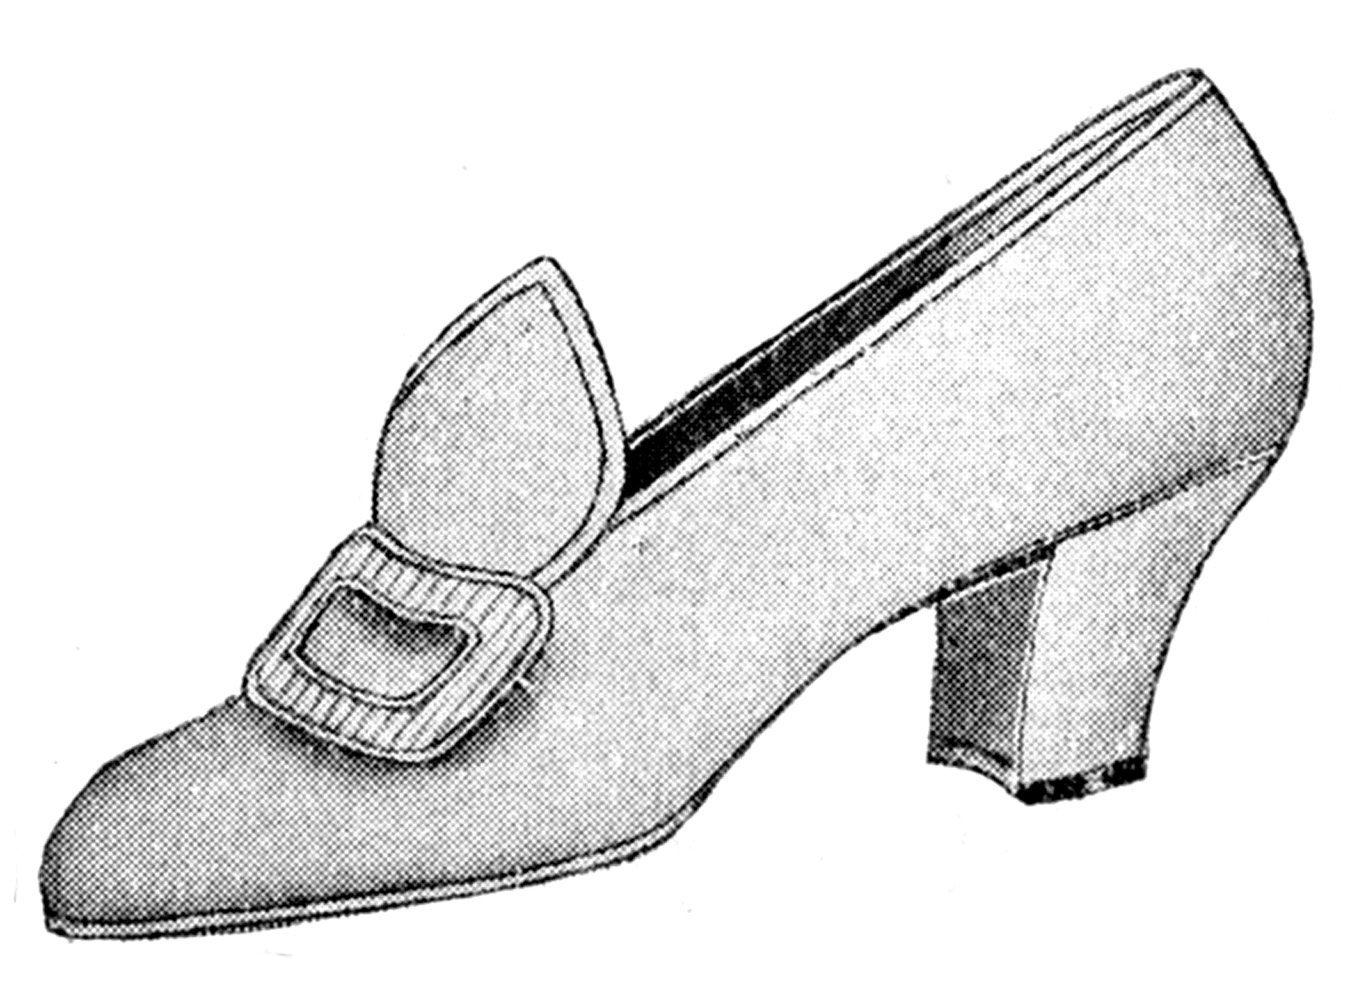 Shoe clip art at vector free image clipartix